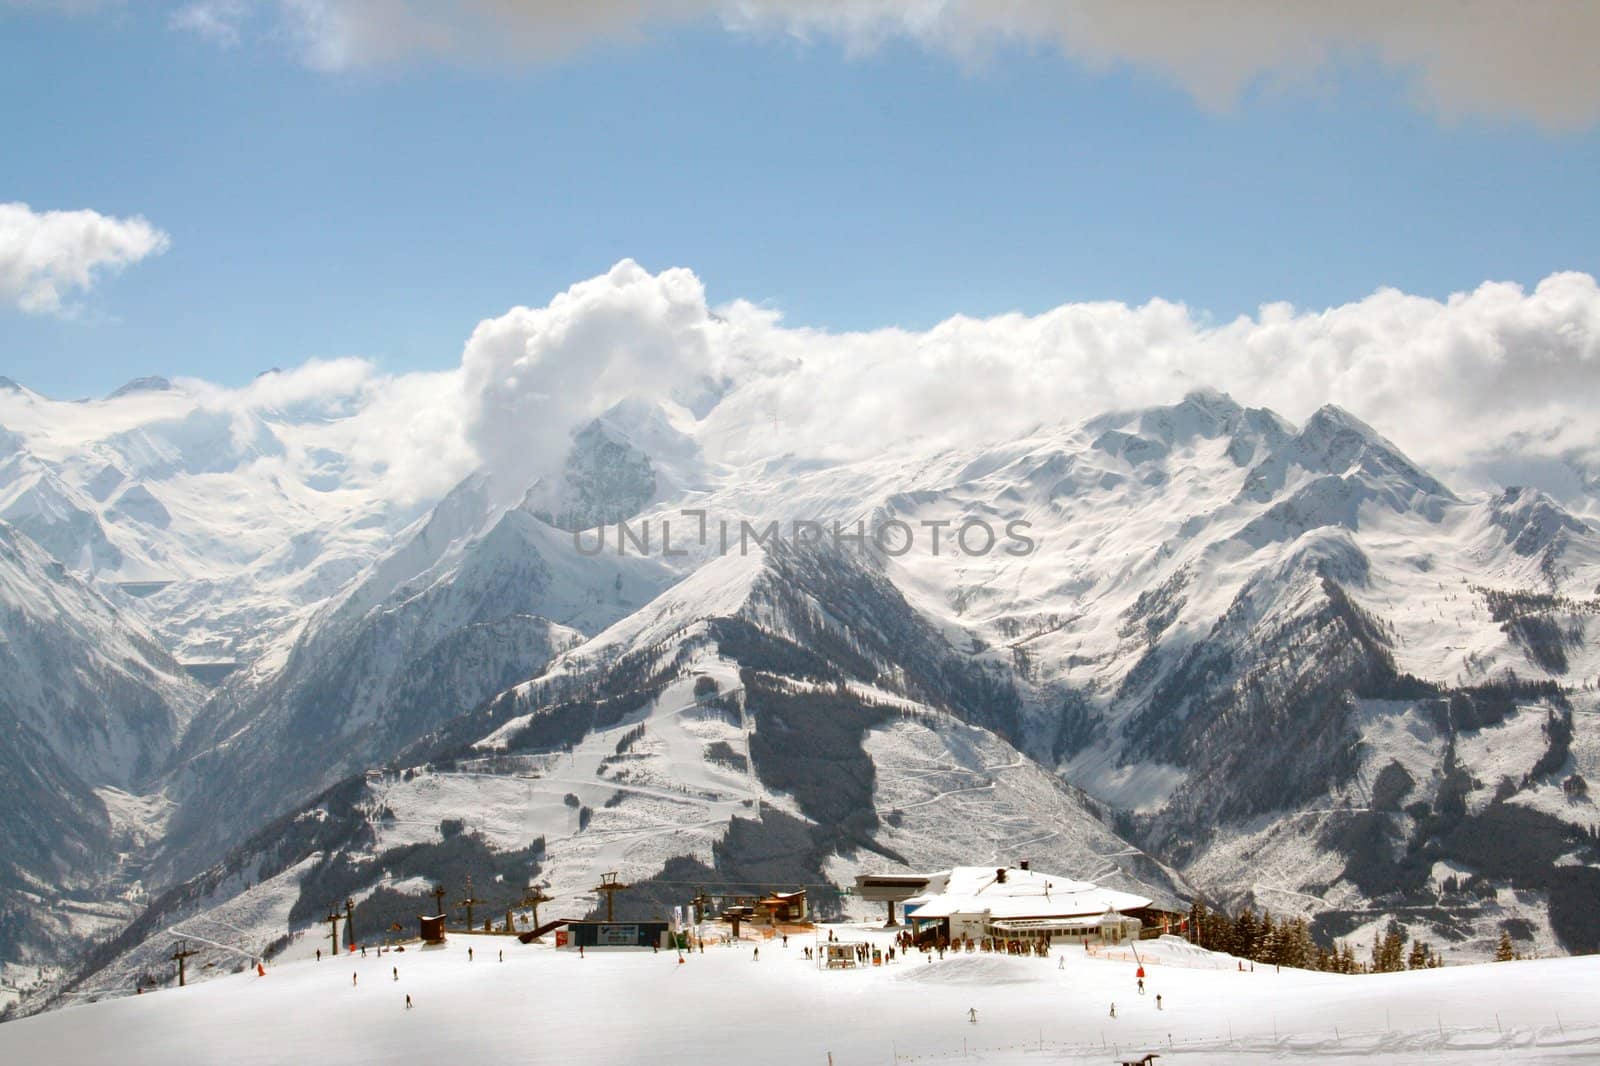 Beautiful scenery of Swiss Alps mountains.